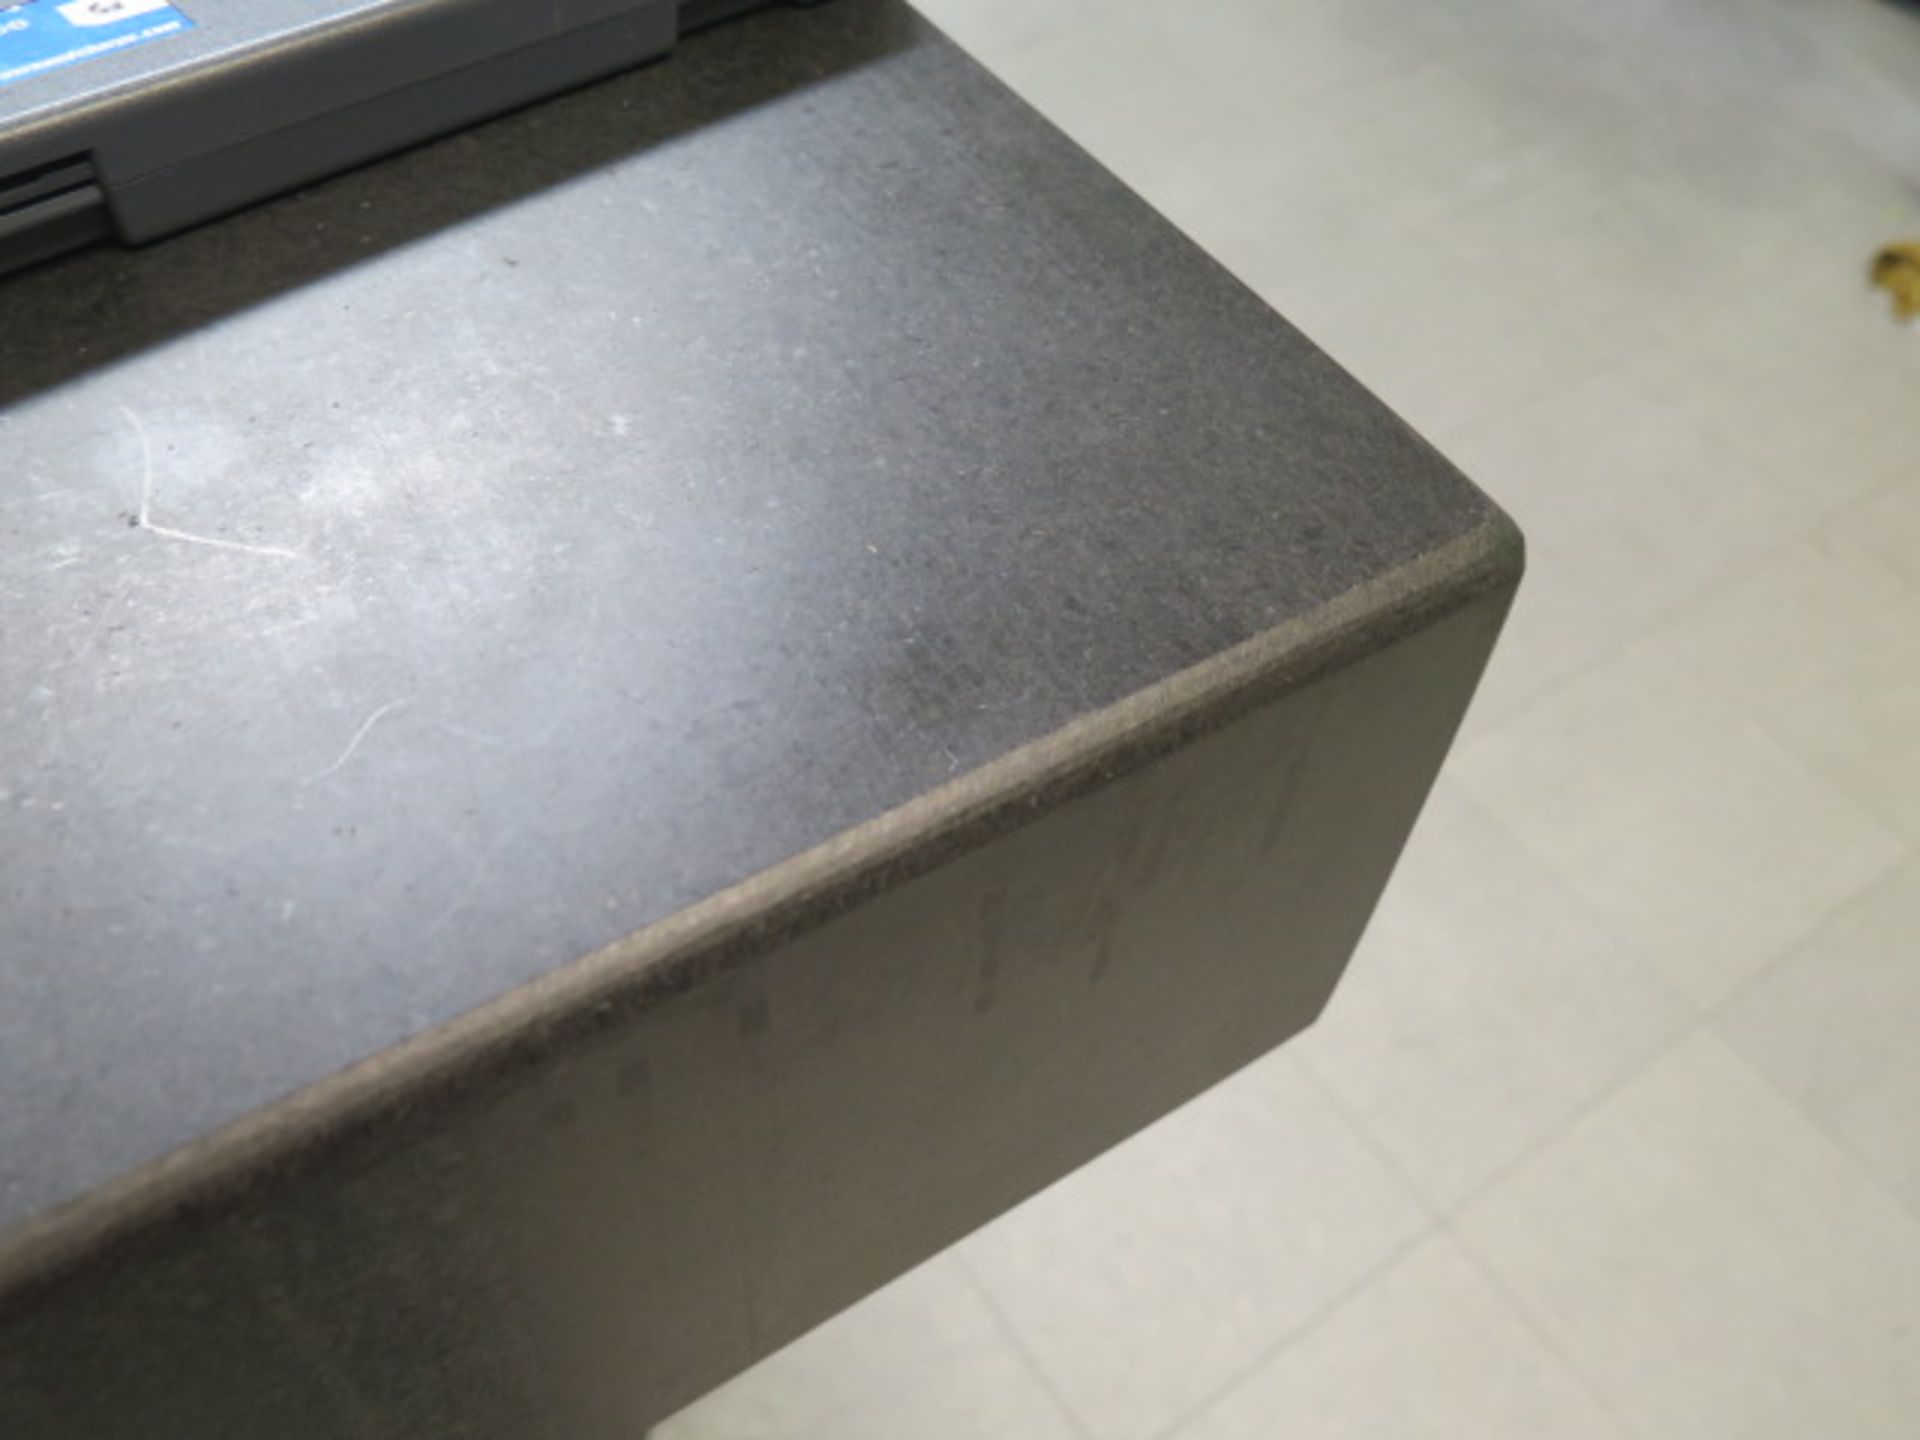 Standridge 36" x 48" x 6" Granite Surface Plate w/ Stand - Image 3 of 3